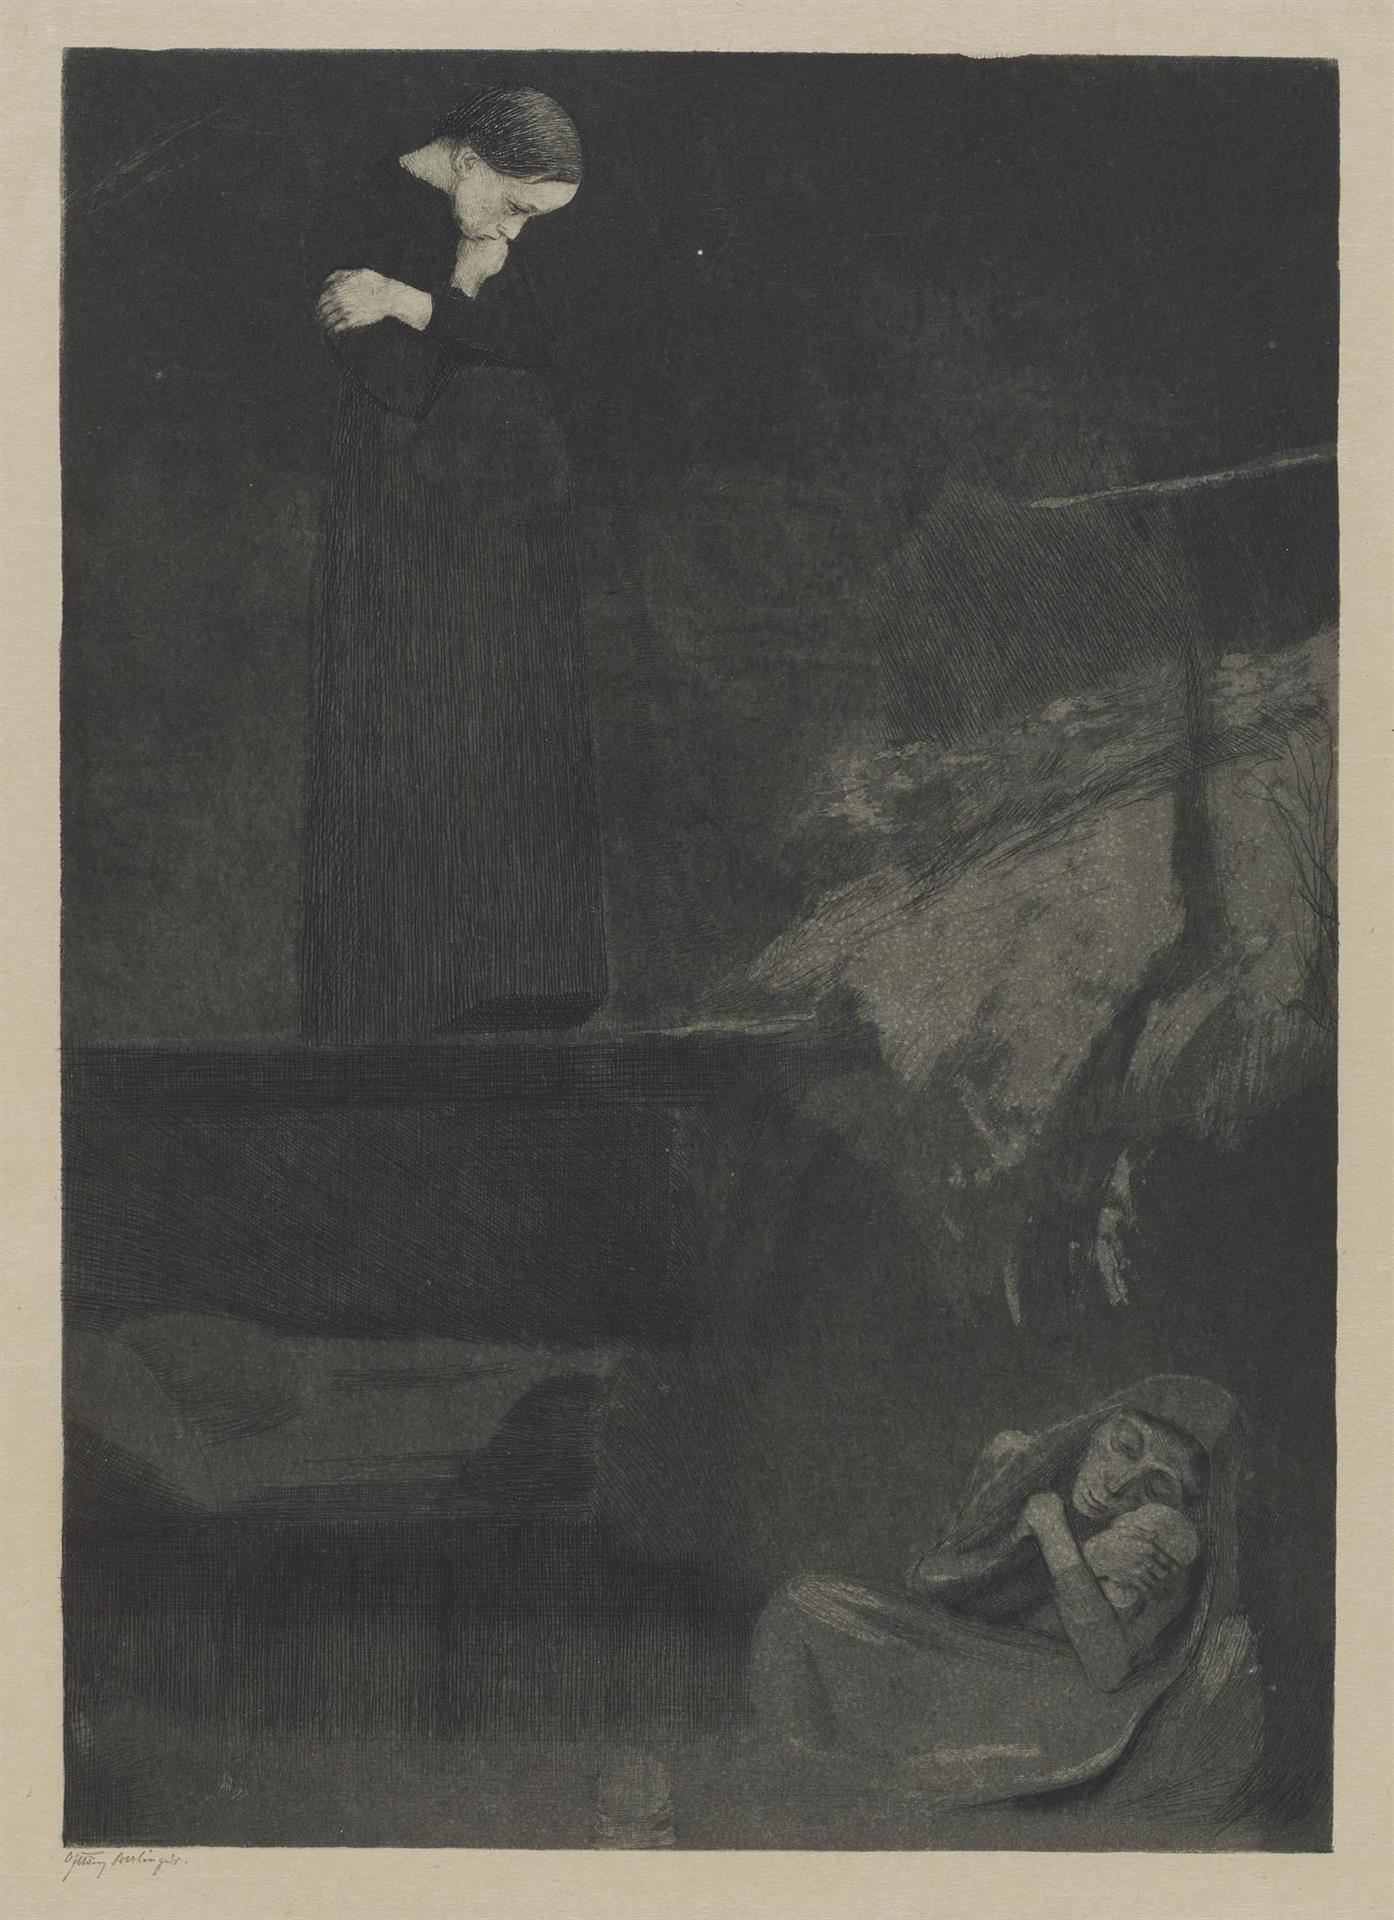 Käthe Kollwitz, Gretchen, 1899, line etching, drypoint, aquatint and burnisher, Kn 45 IV, Cologne Kollwitz Collection © Käthe Kollwitz Museum Köln